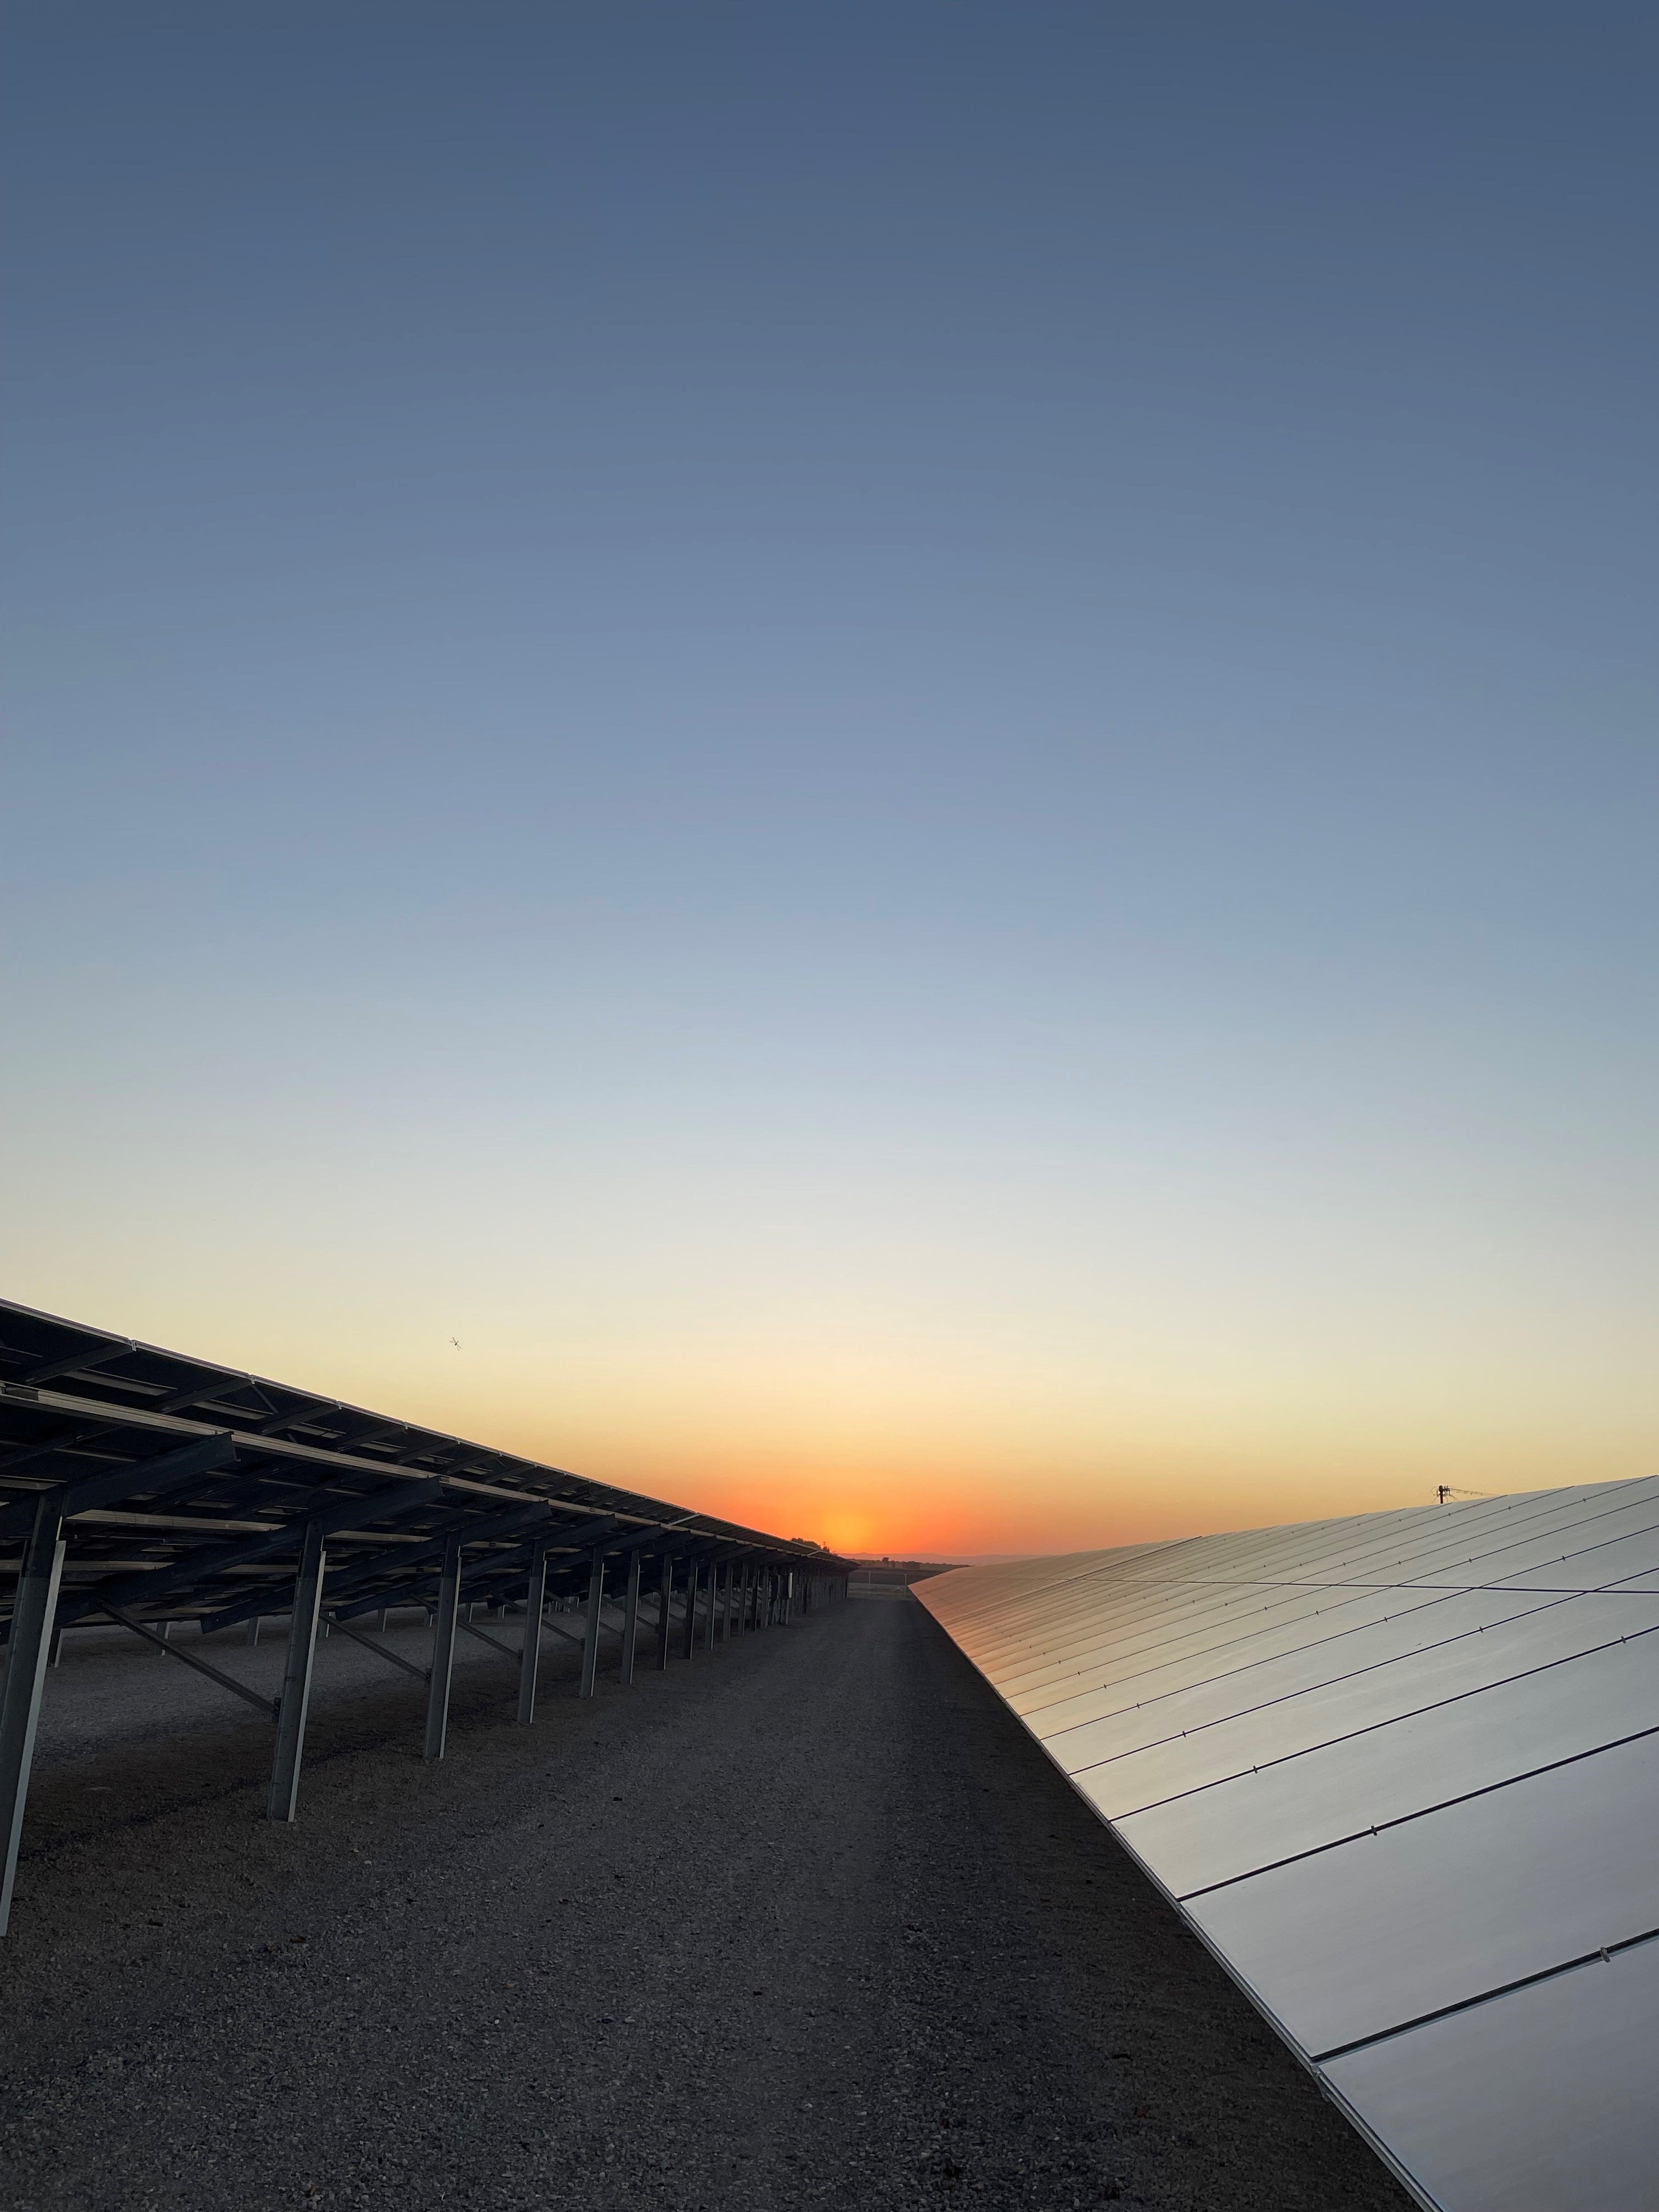 solar array at sunset